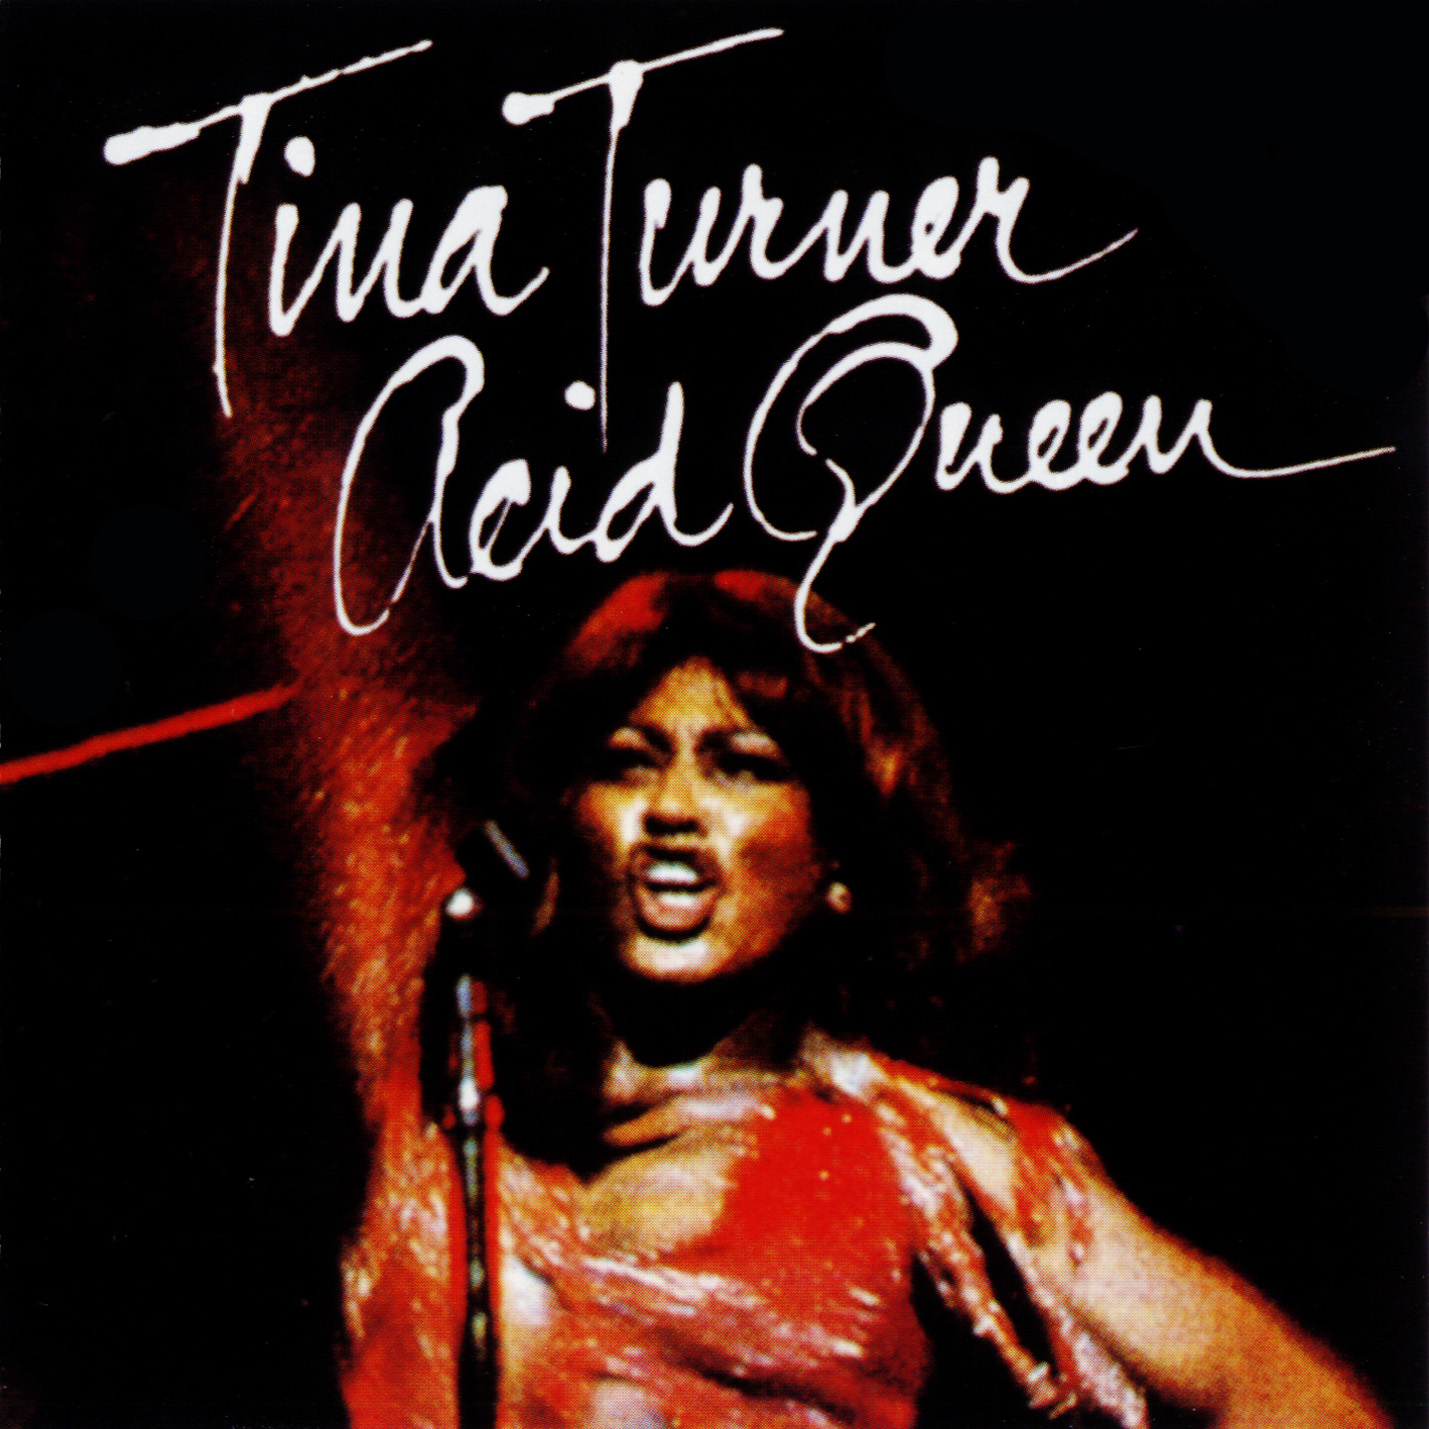 http://3.bp.blogspot.com/-yzgDMd2AKTE/ThnHF2DFLhI/AAAAAAAABzw/zIS4v2D_Y8M/s1600/Tina+Turner+-+Acid+Queen+-+Front.jpg